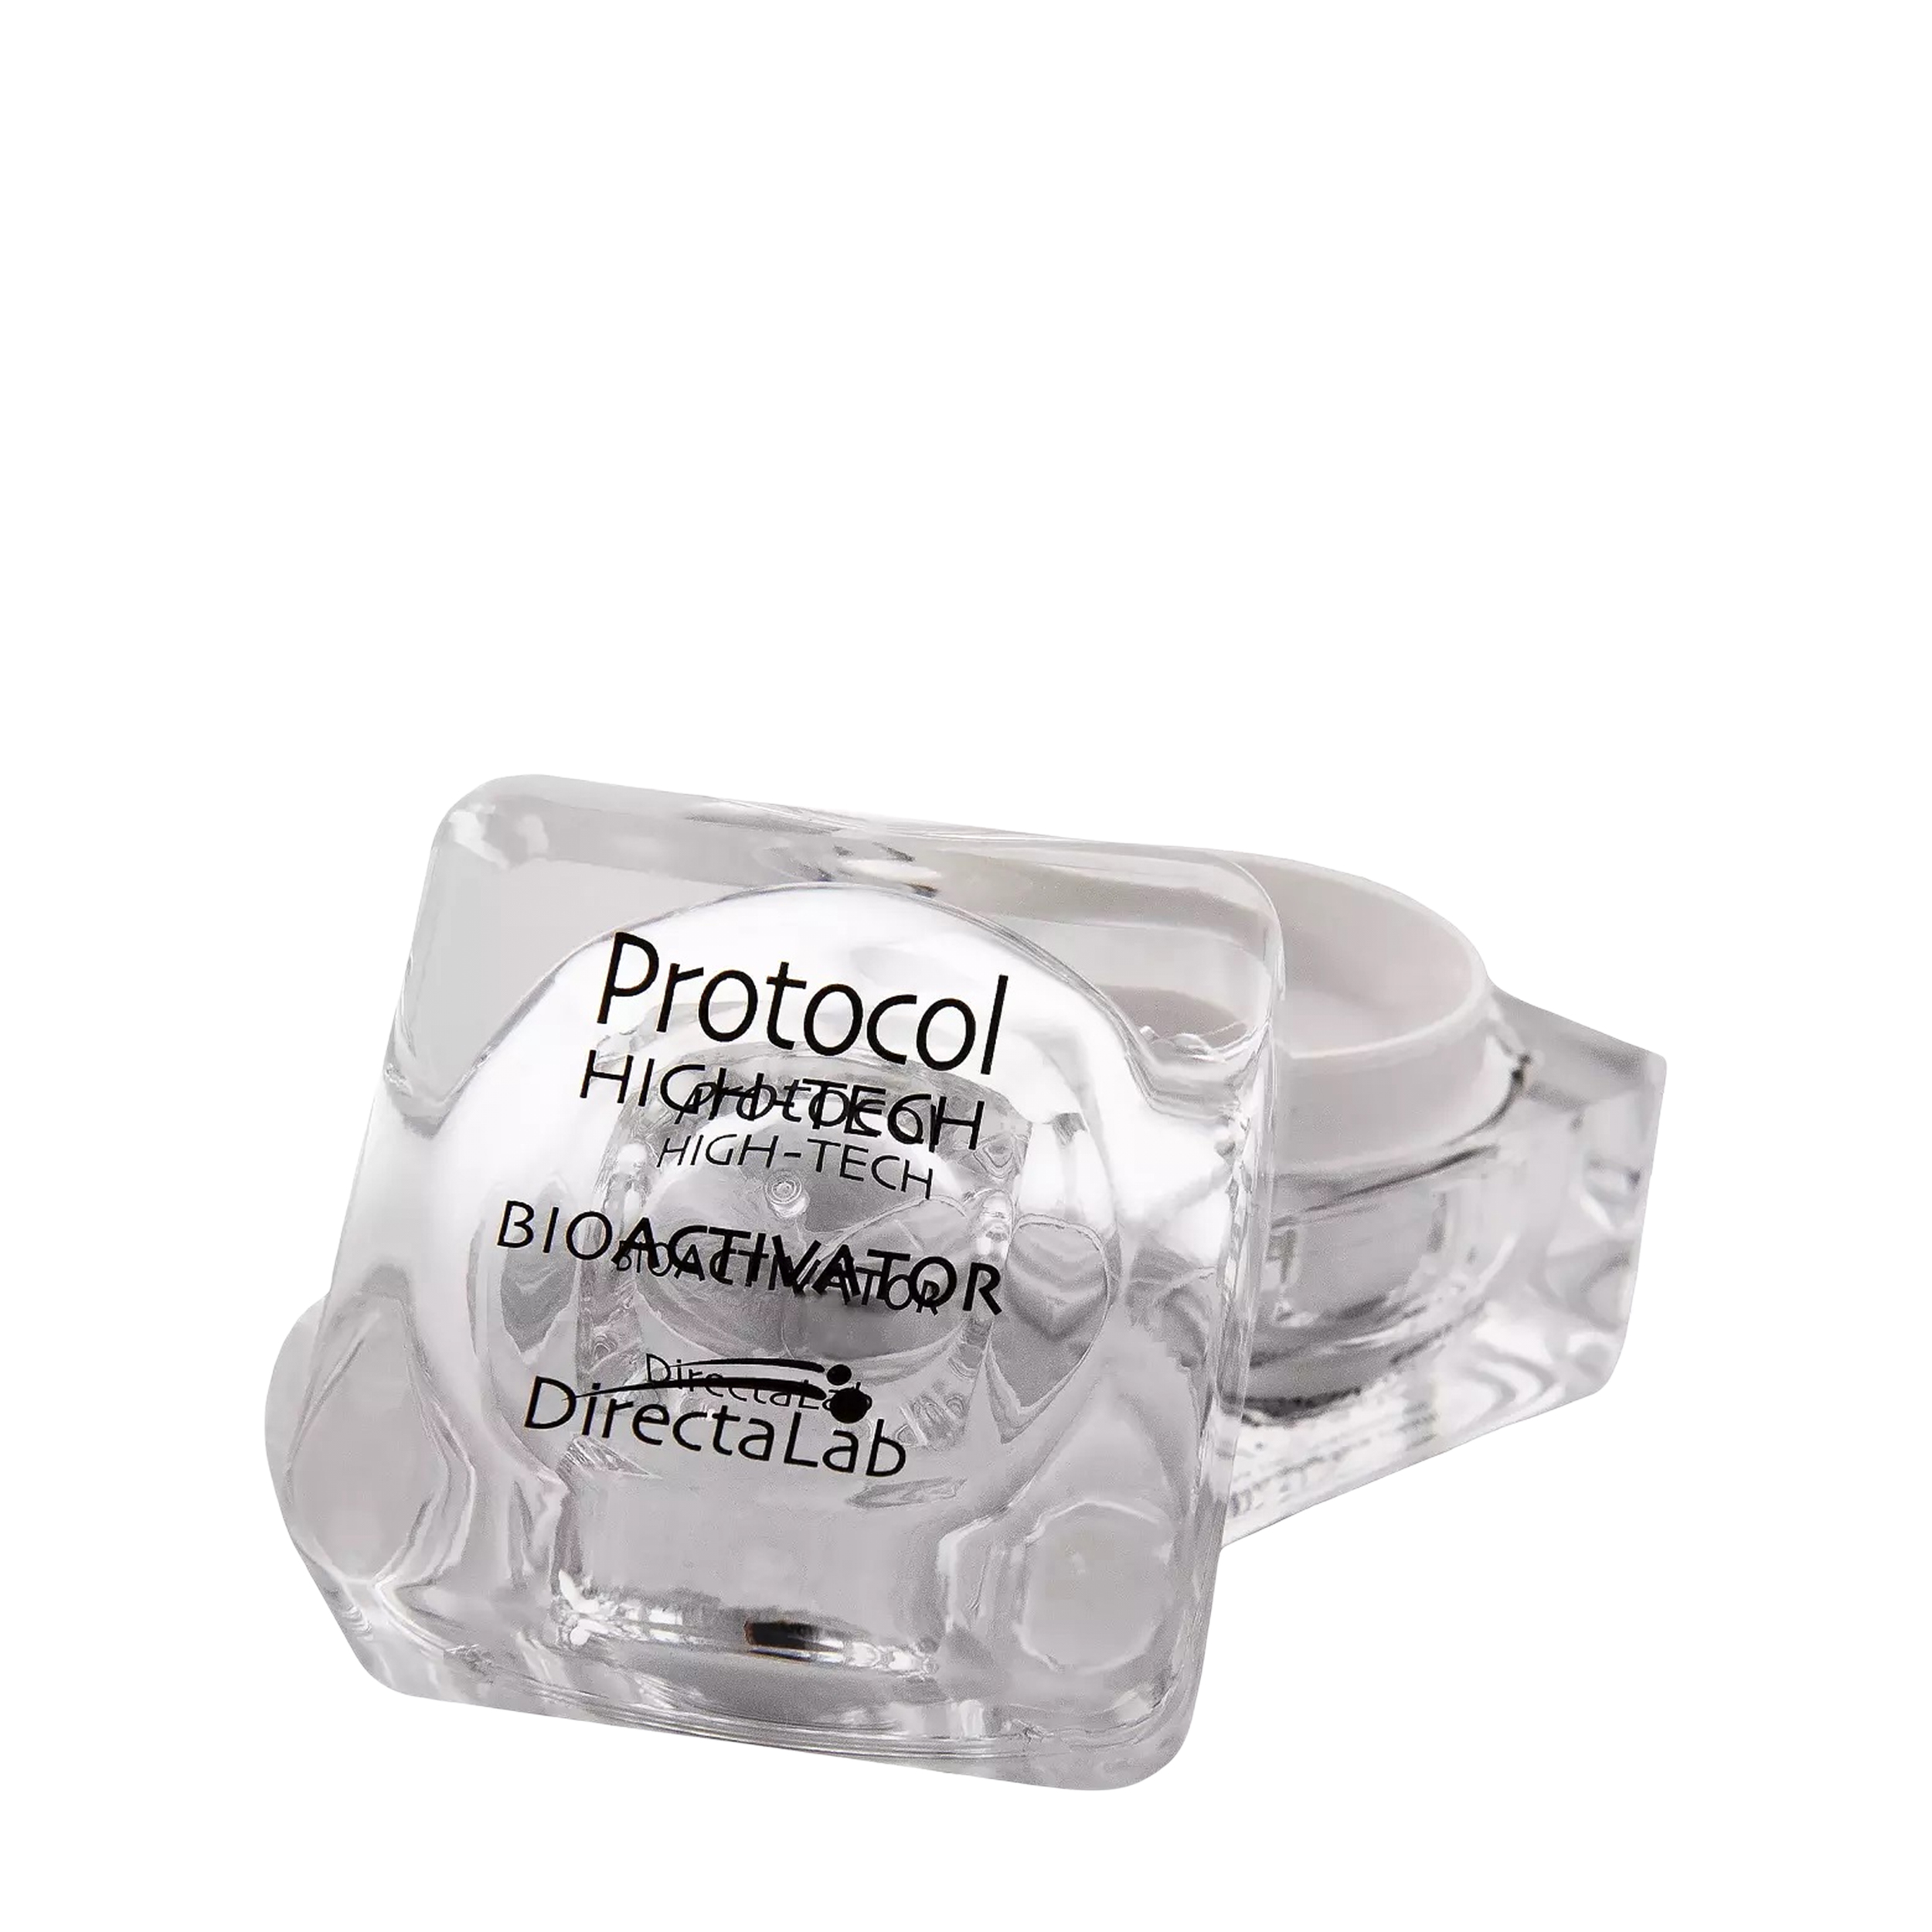 Directalab Directalab Антивозрастной крем-биоактиватор для лица Protocol High-Tech Bioactivator 30 мл